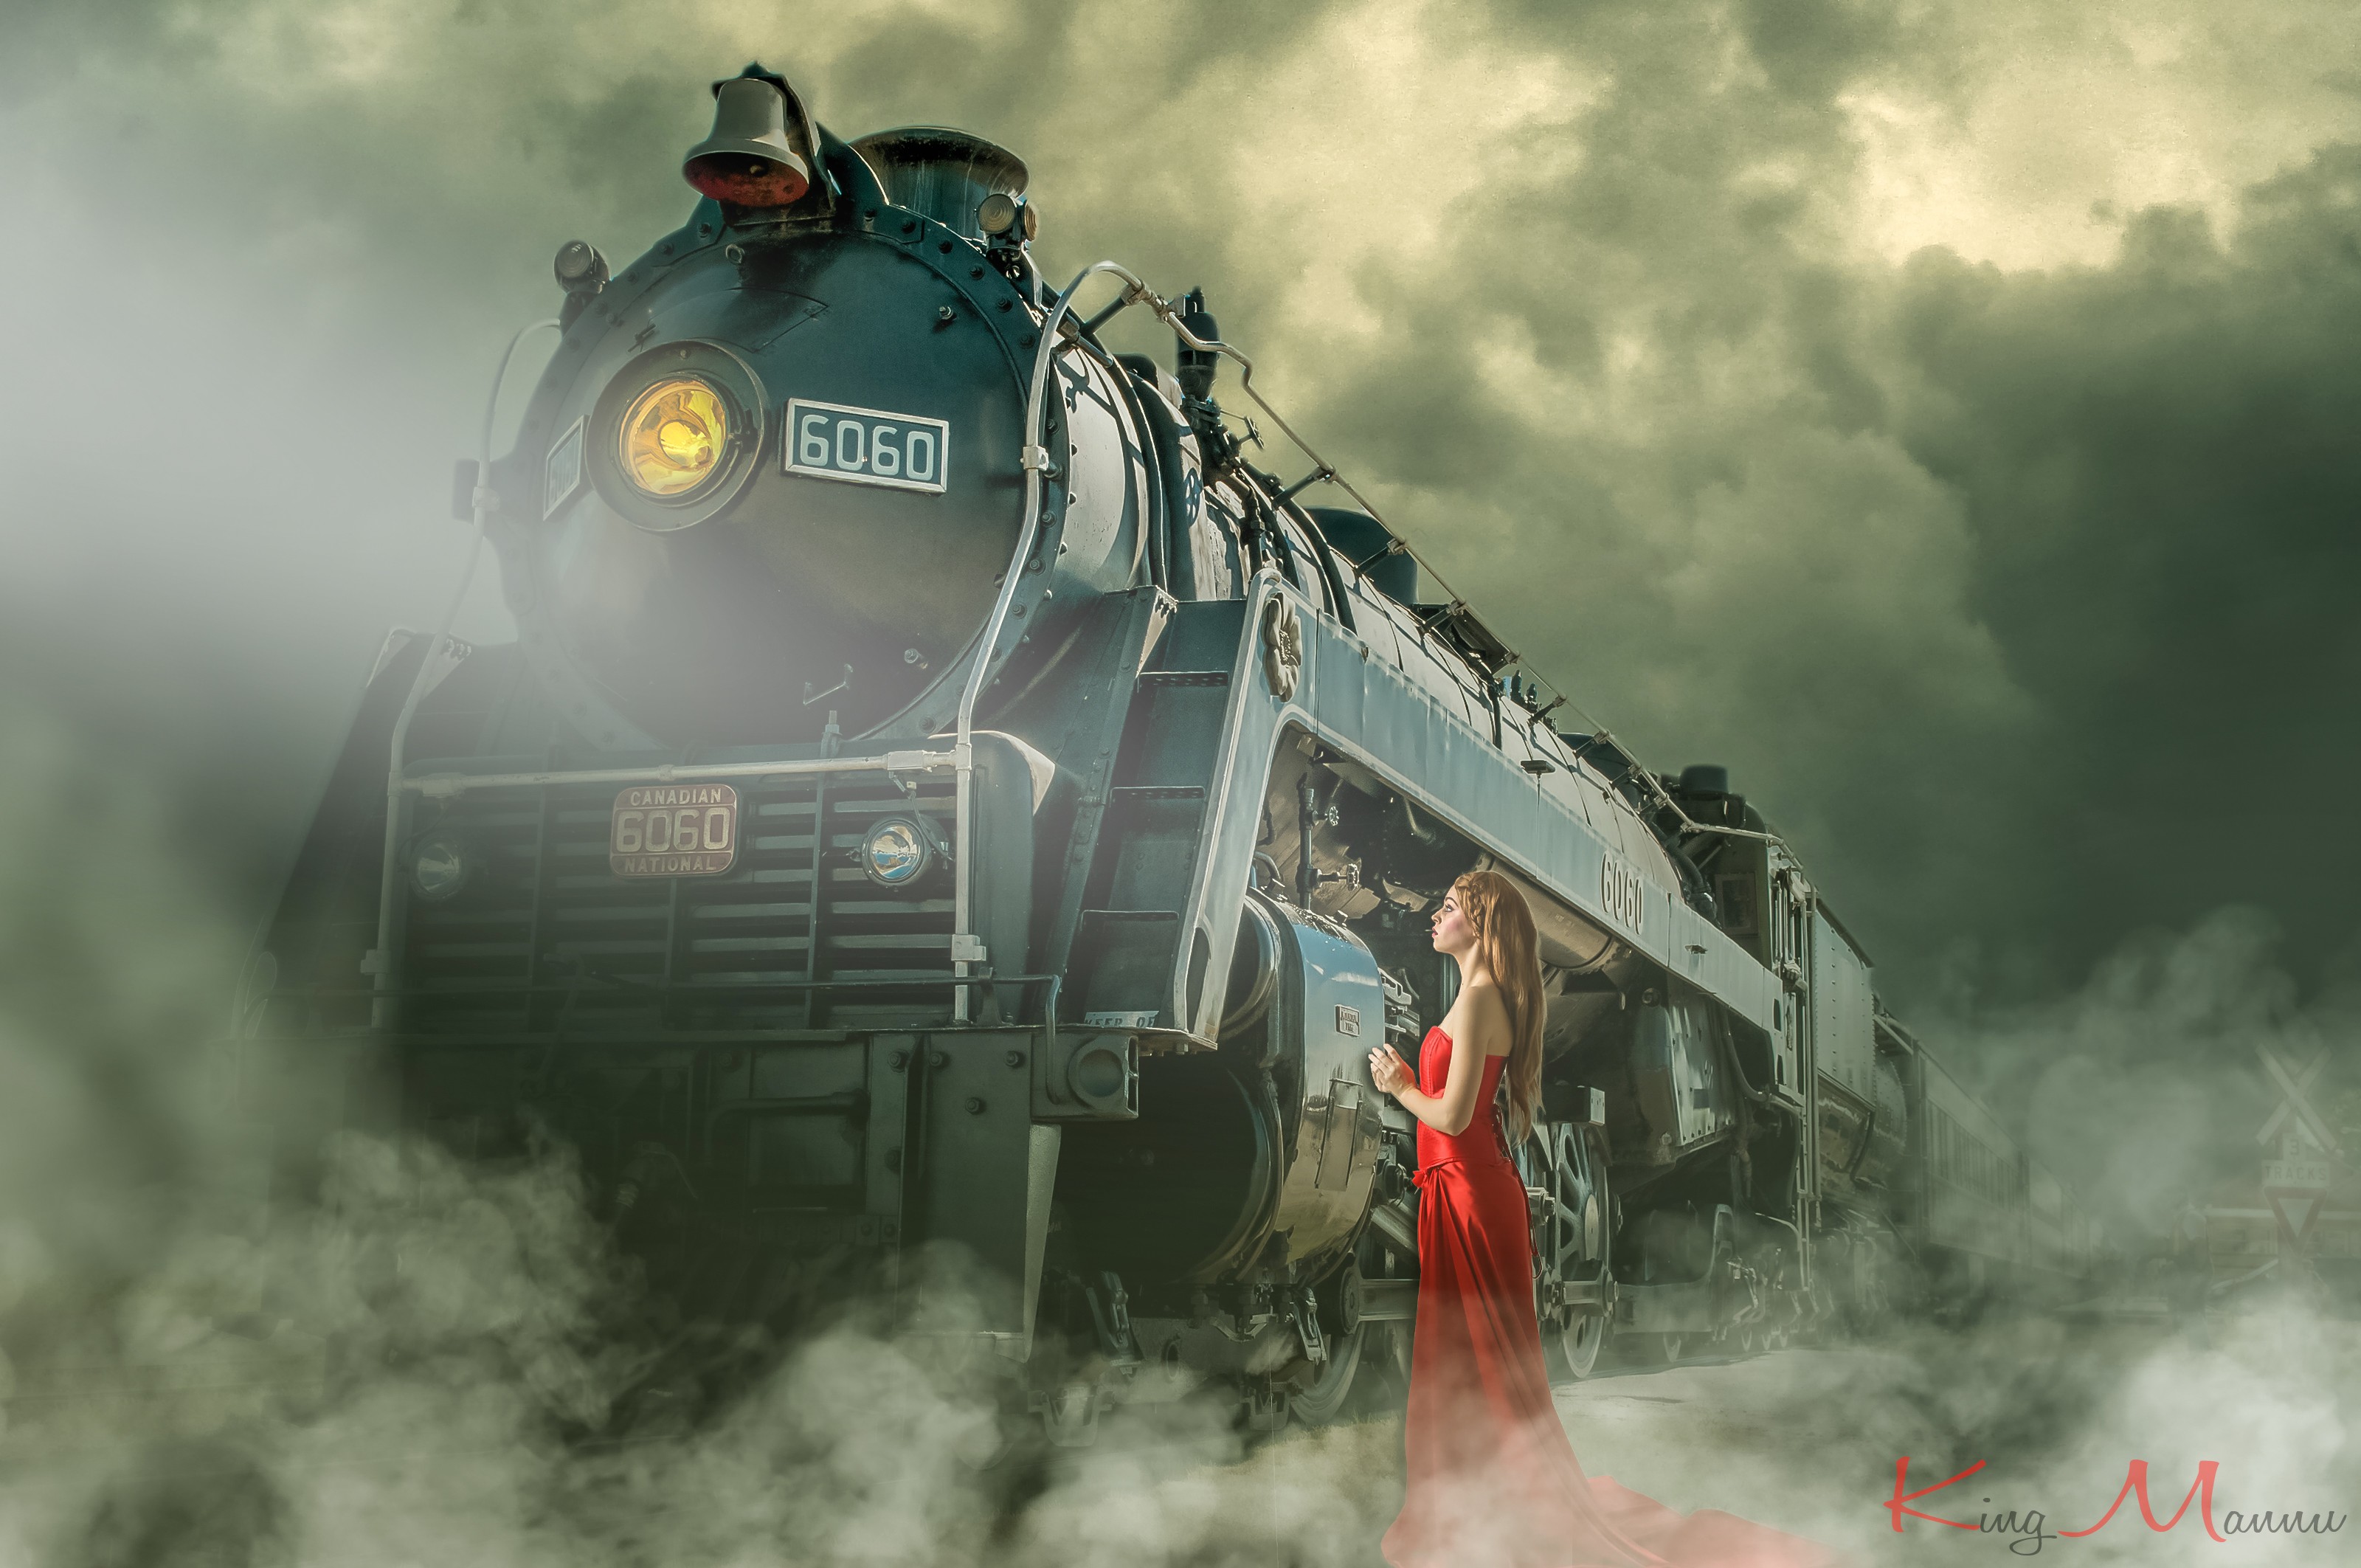 General 3200x2125 steam locomotive women mist vehicle locomotive train dress red dress numbers blonde red clothing Steam Train